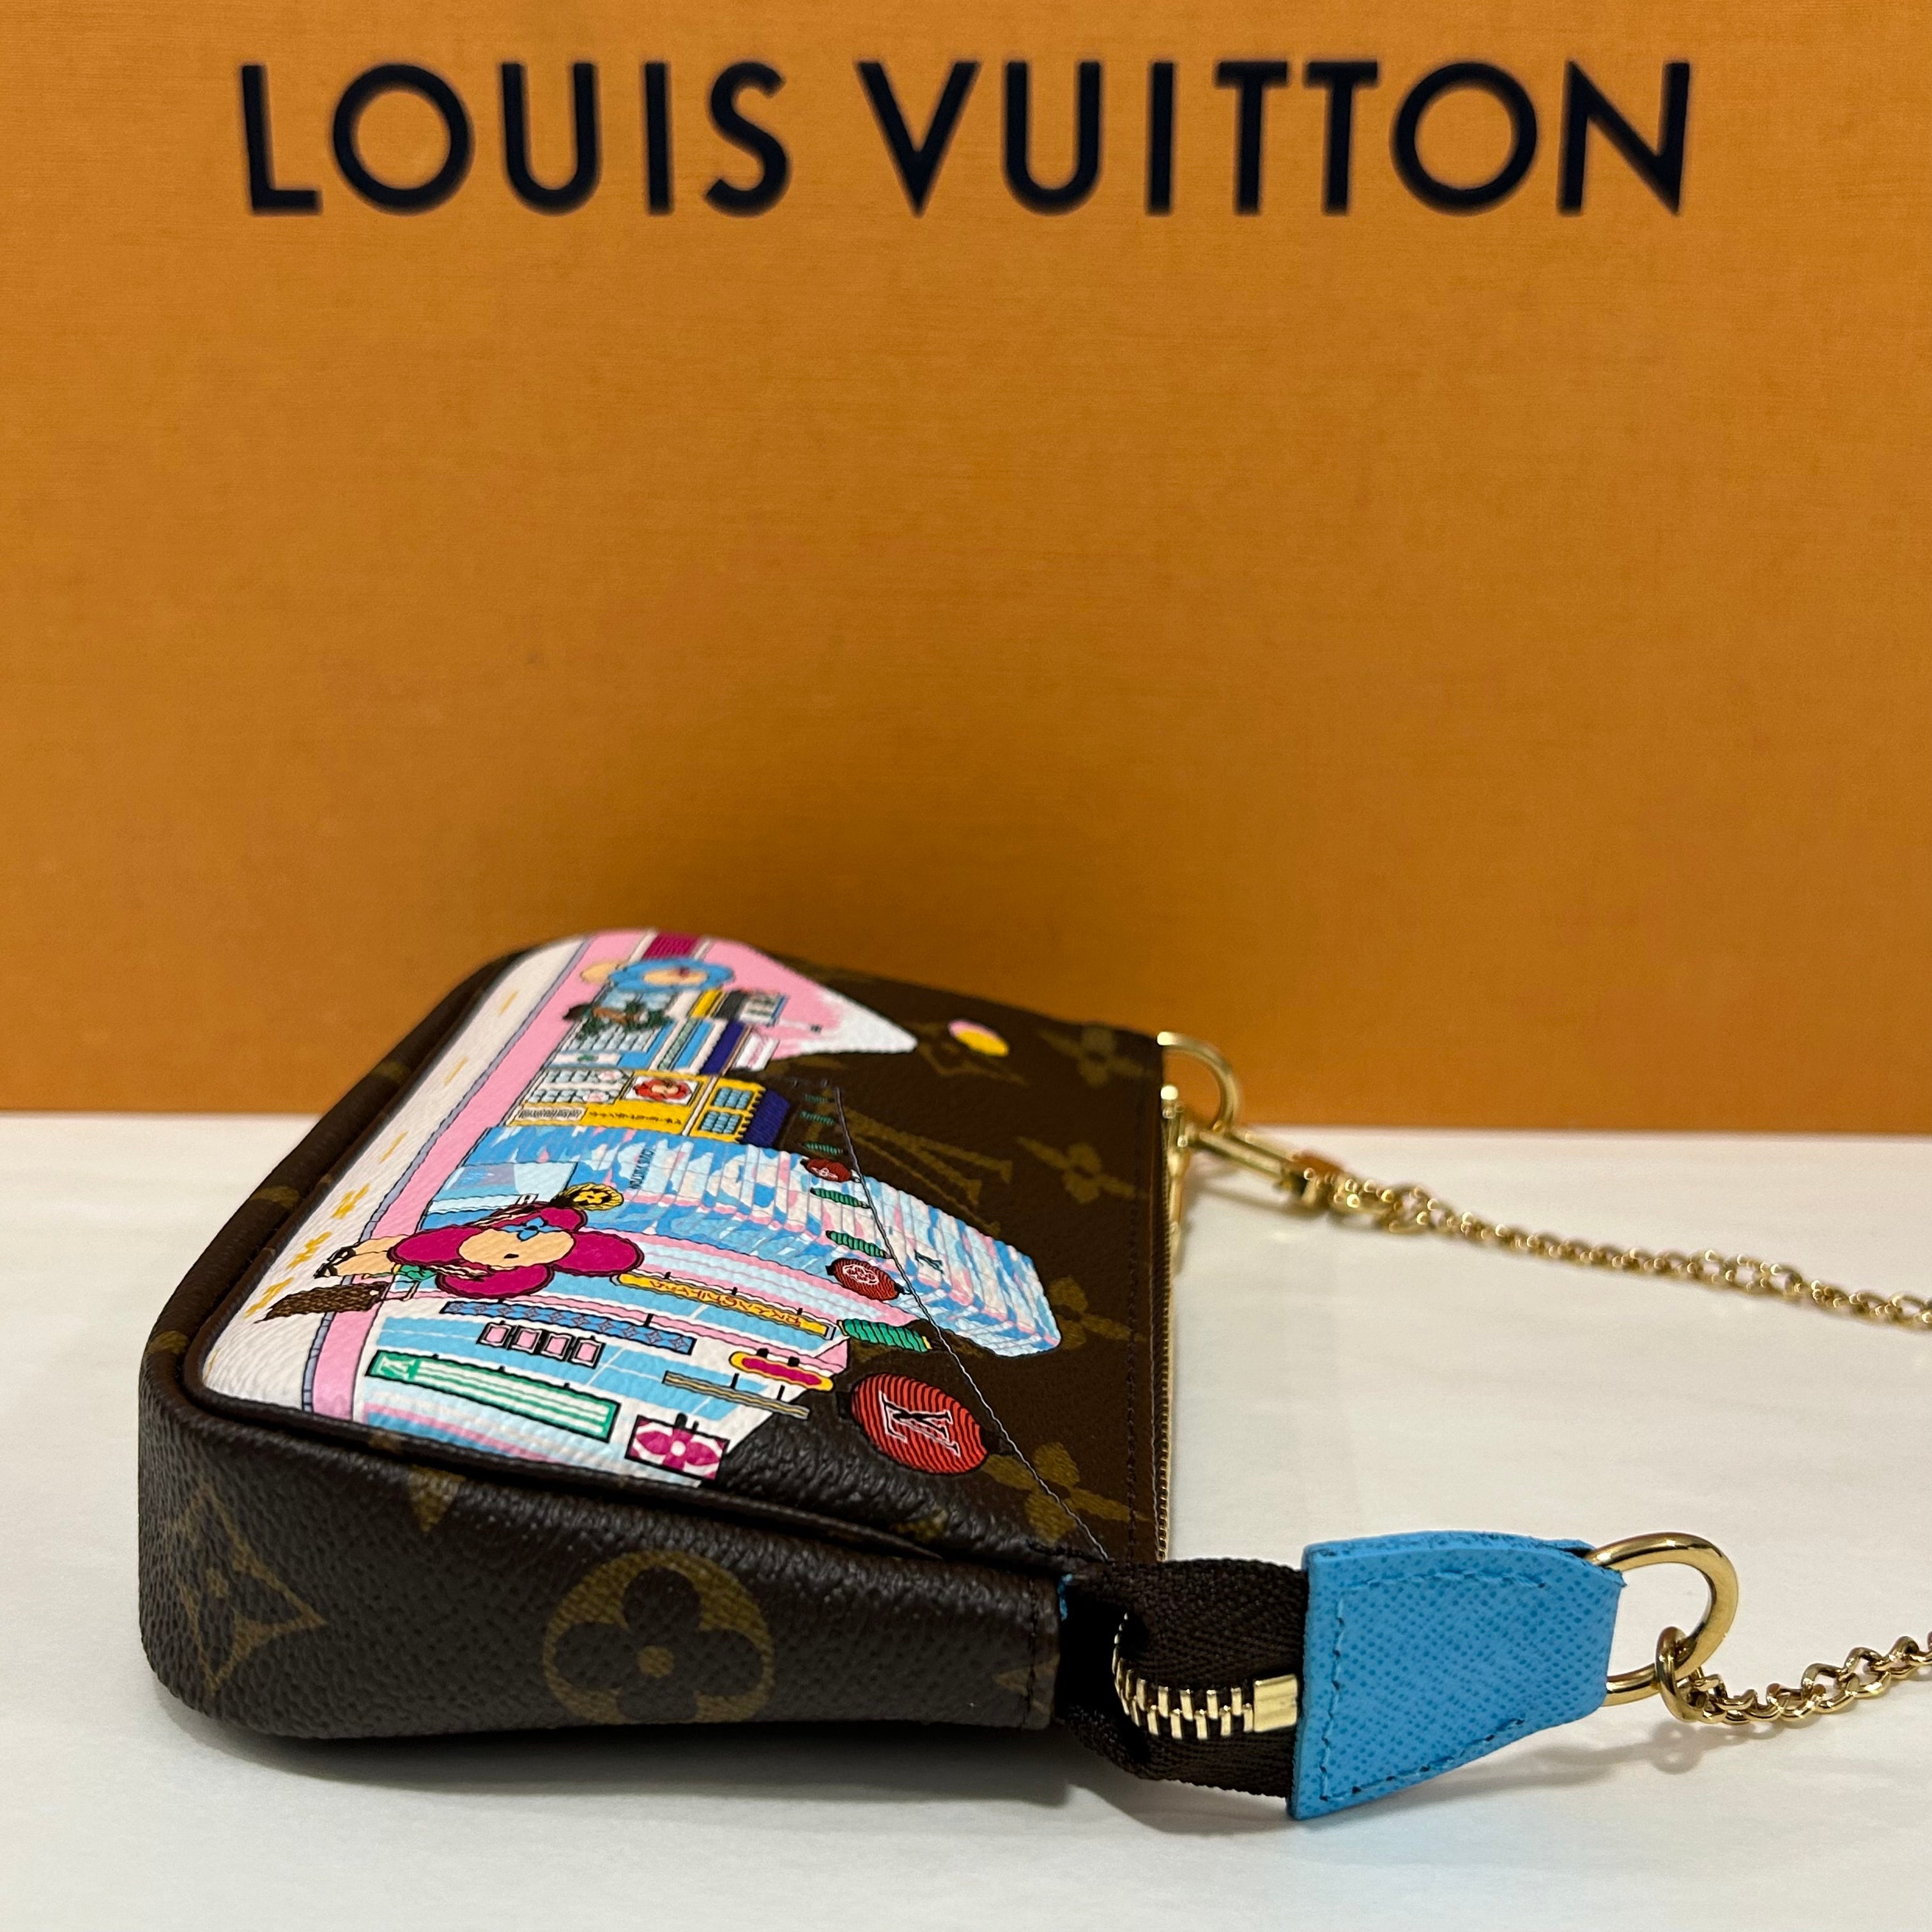 Louis Vuitton - Mini clutch